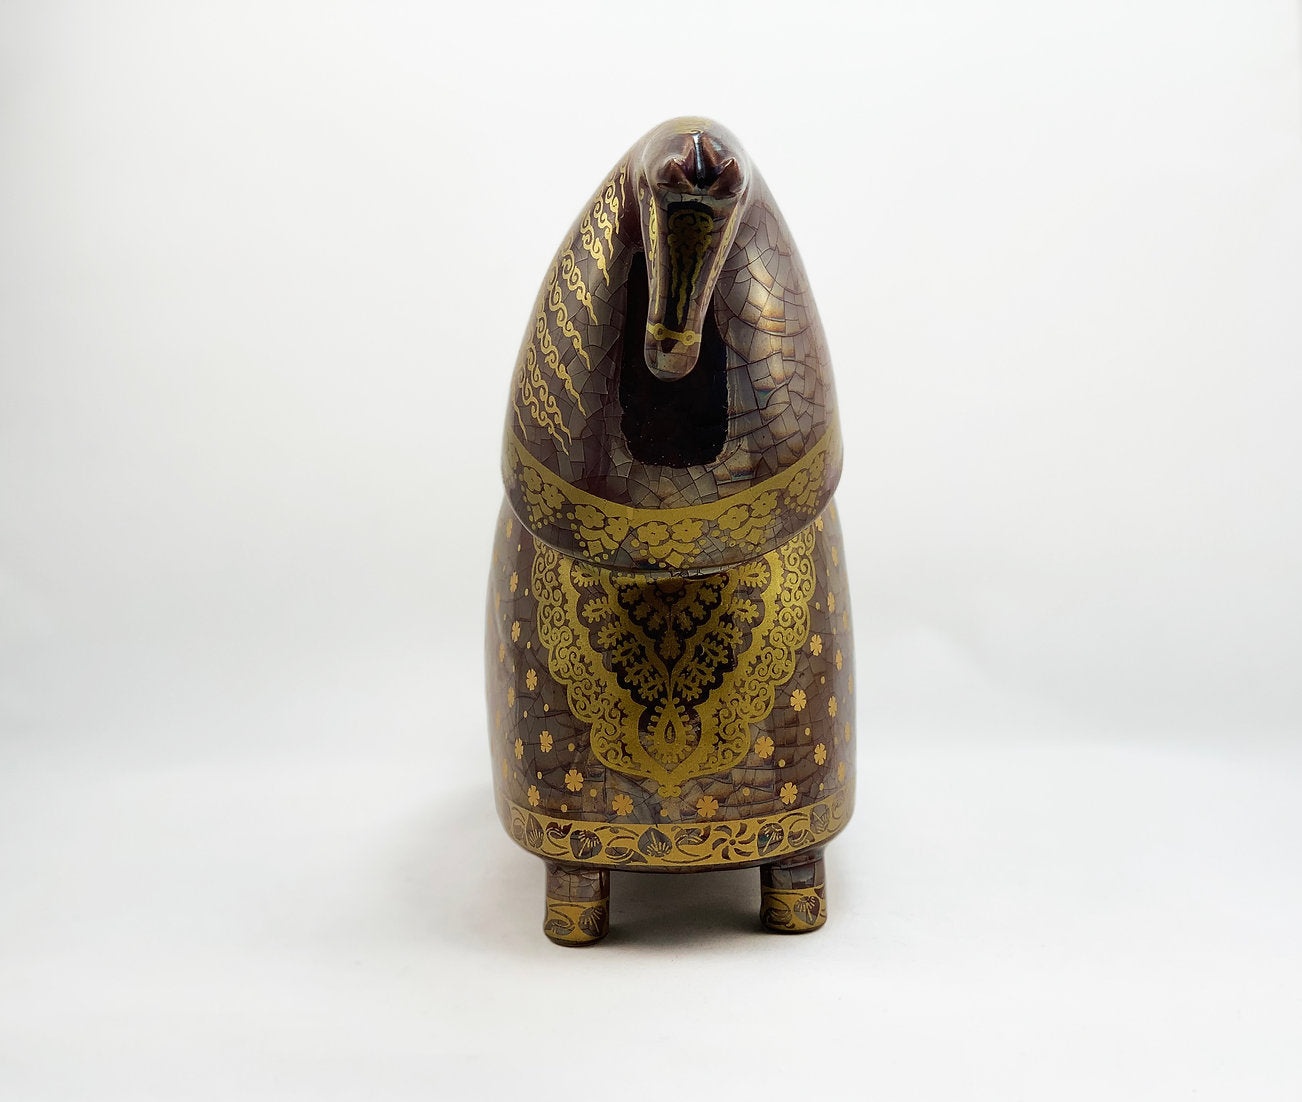 Modern Knight ceramic figurine